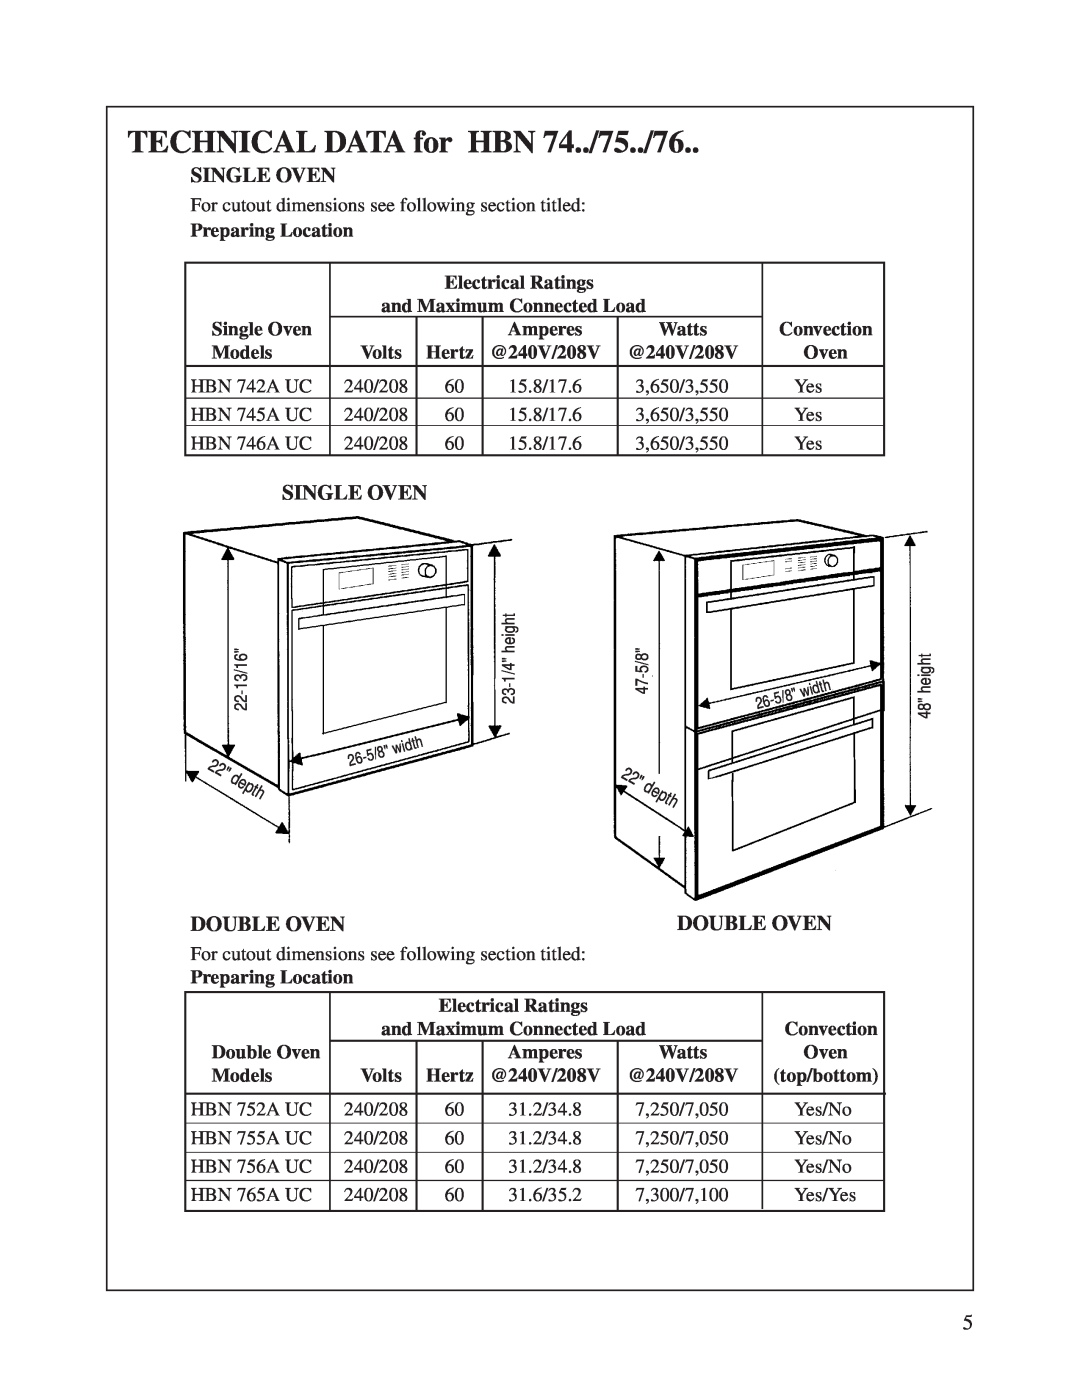 Bosch Appliances instruction manual TECHNICAL DATA for HBN 74../75../76 